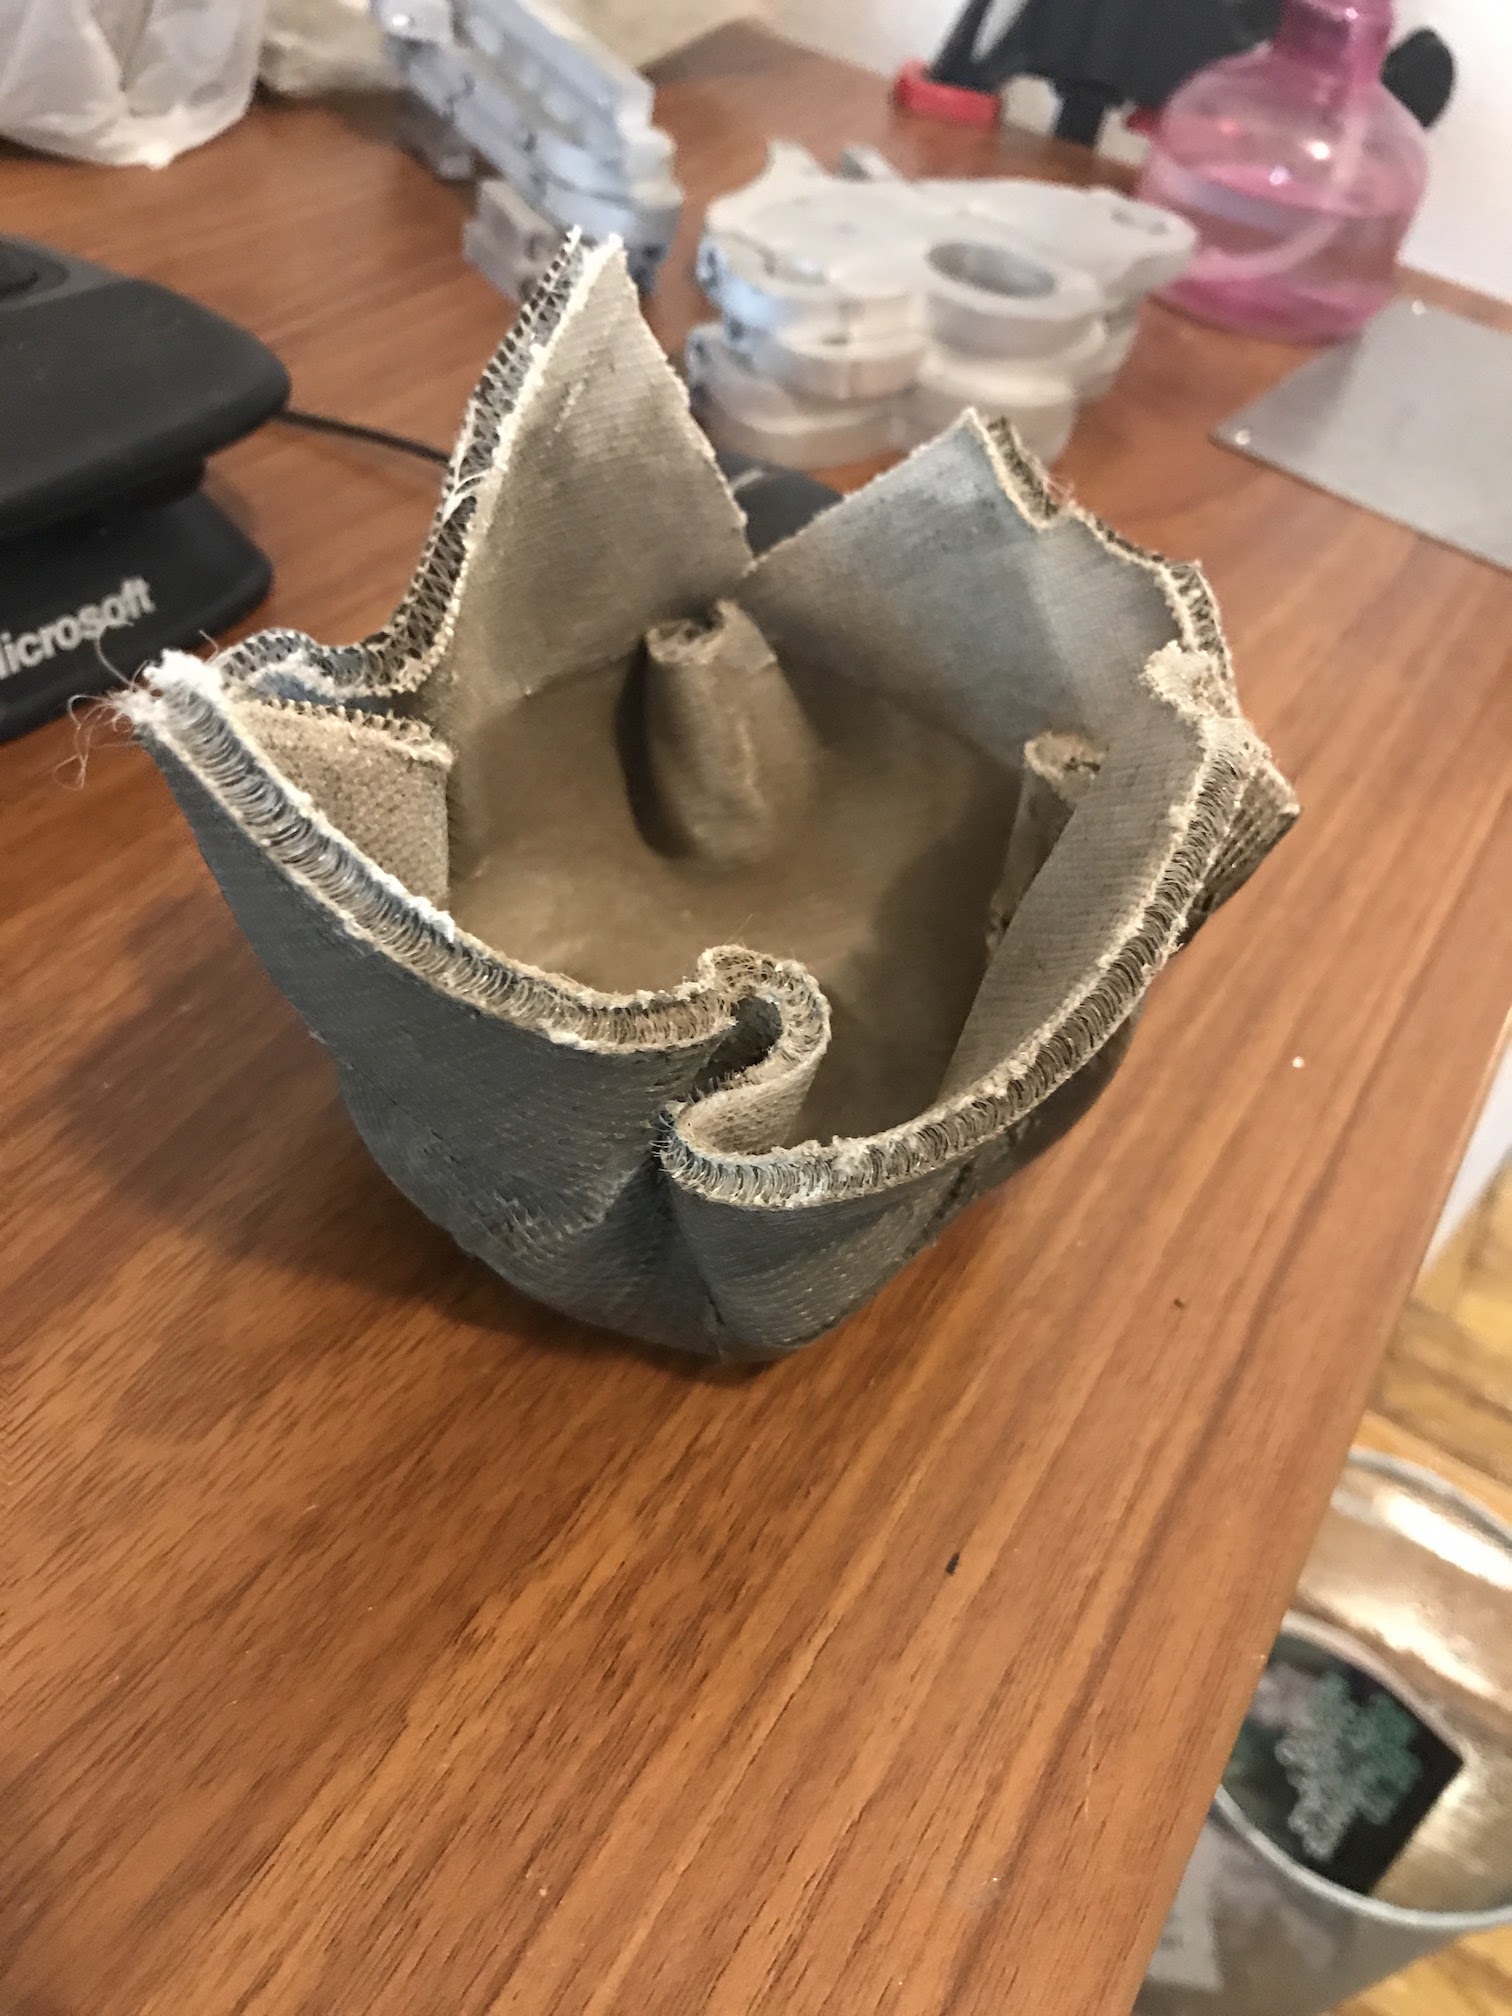 The finished jar vase.